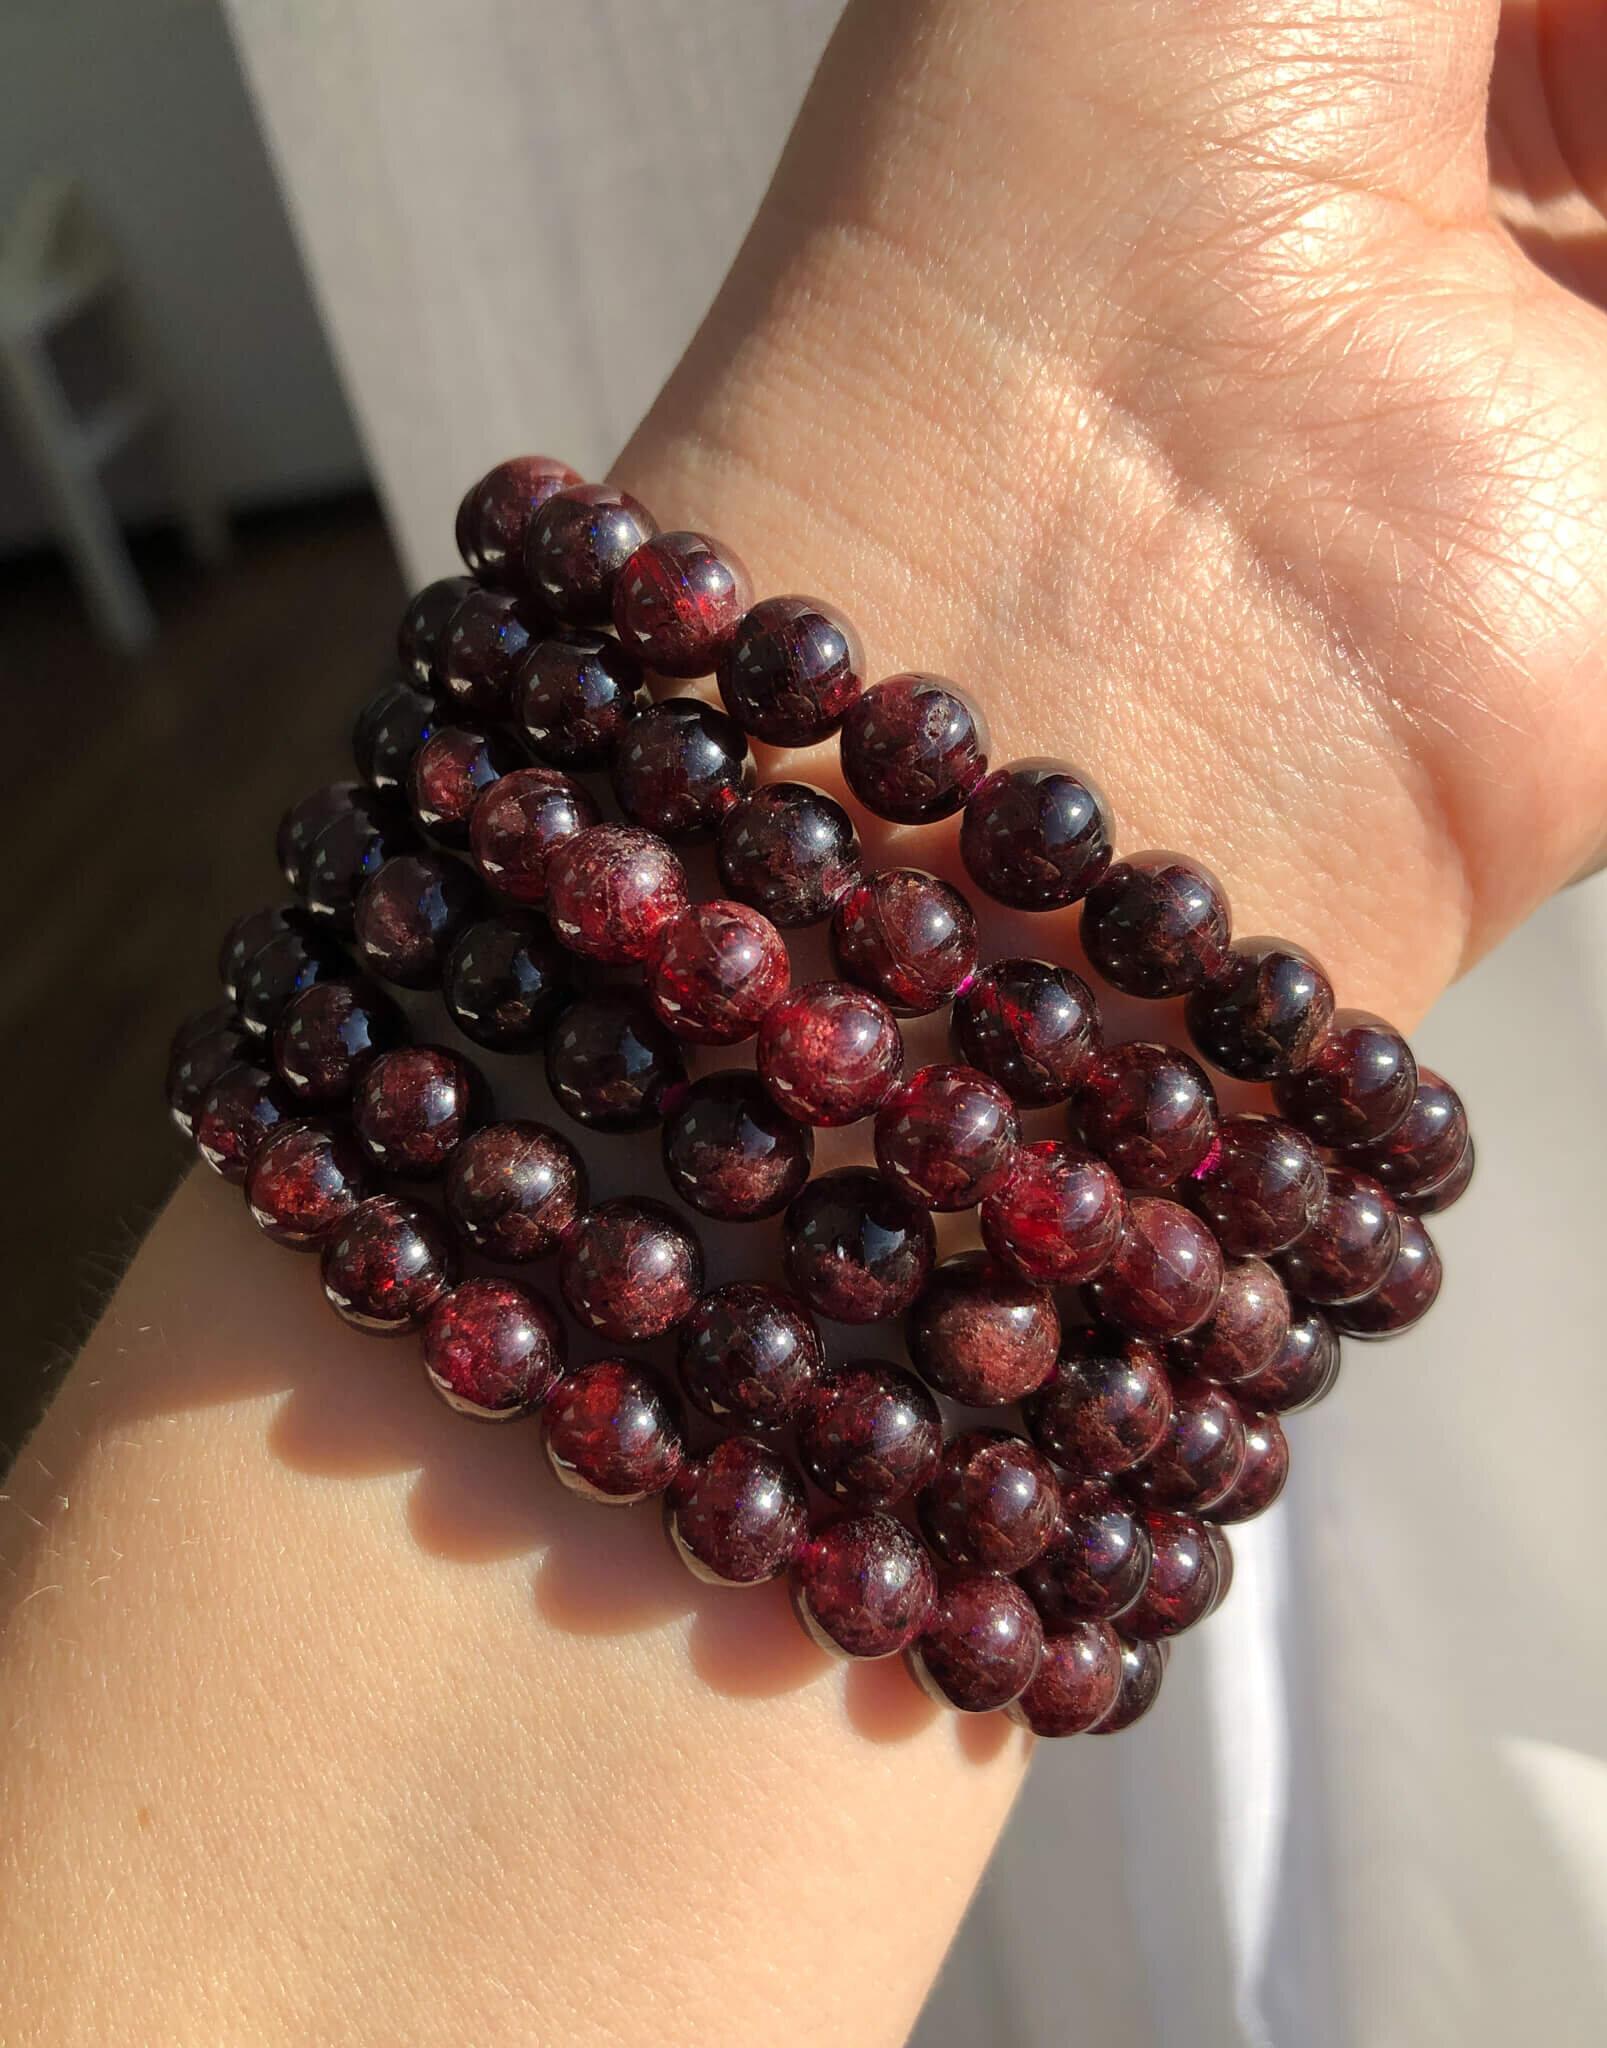 Buy ARIHANT HANDICRAFTS Red Garnet Beads Stone Bracelet (8 mm) at Amazon.in